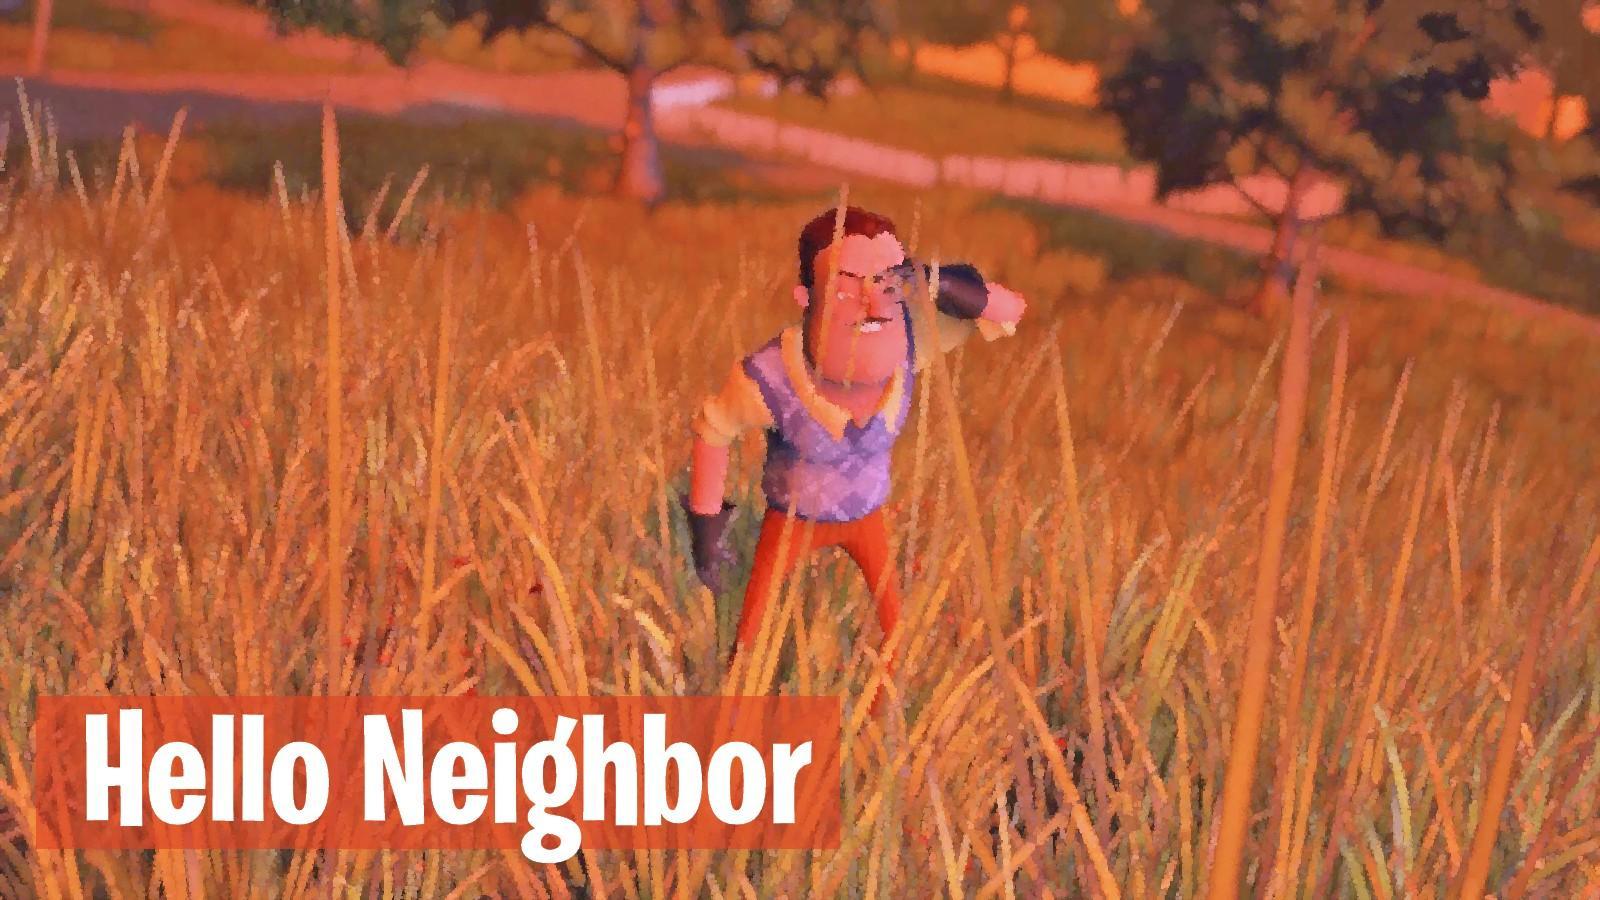 It is not my neighbor. My Neighbor game. That's not my Neighbor игра.